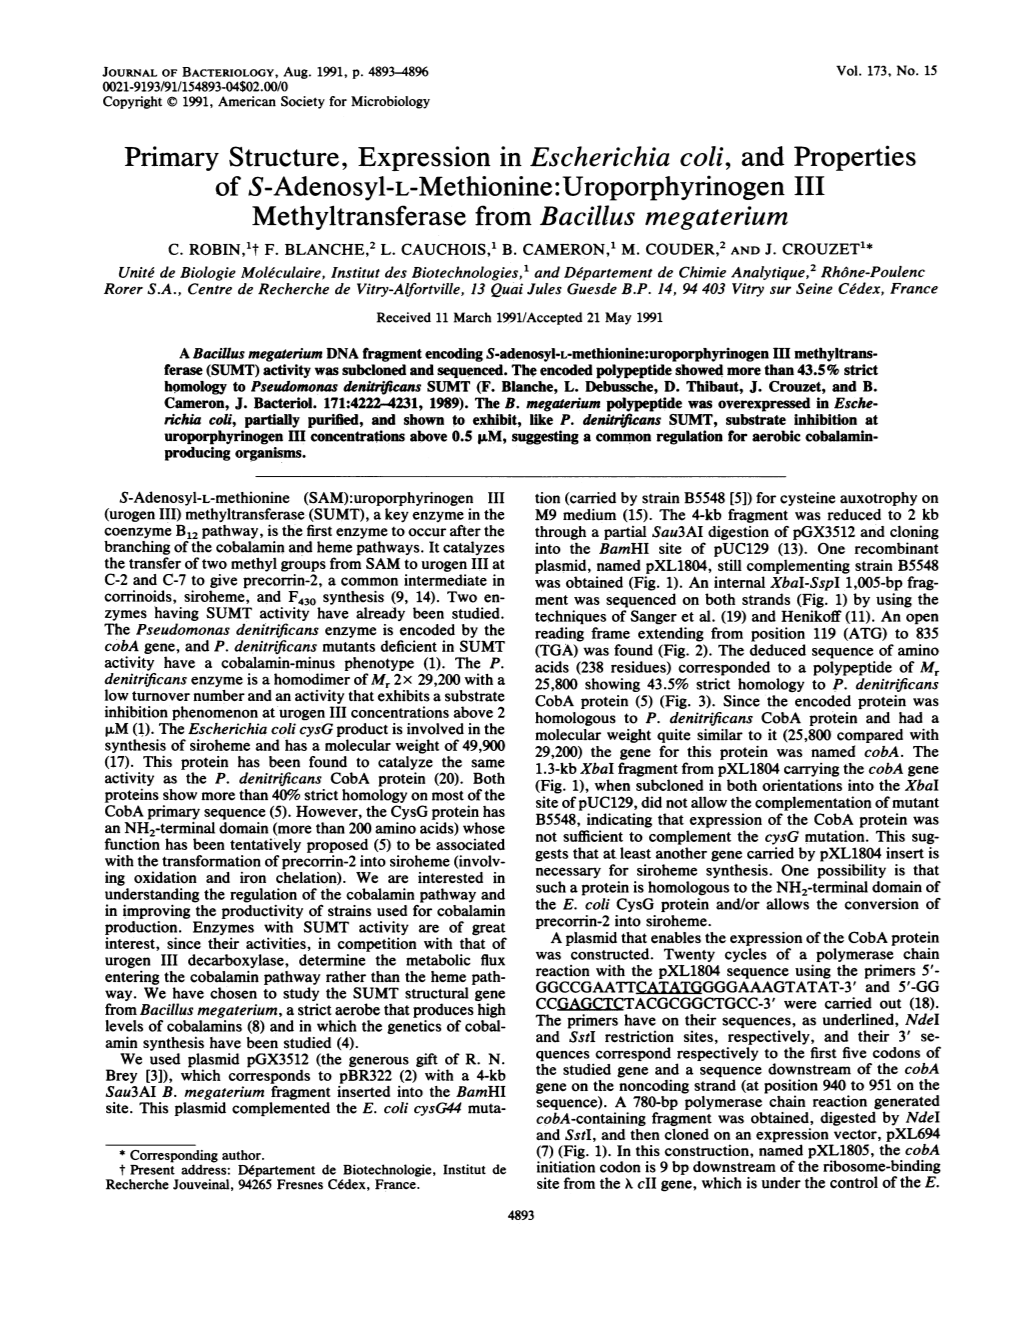 Primary Structure, Expression in Escherichia Coli, and Properties of S-Adenosyl-L-Methionine:Uroporphyrinogen III Methyltransferase from Bacillus Megaterium C